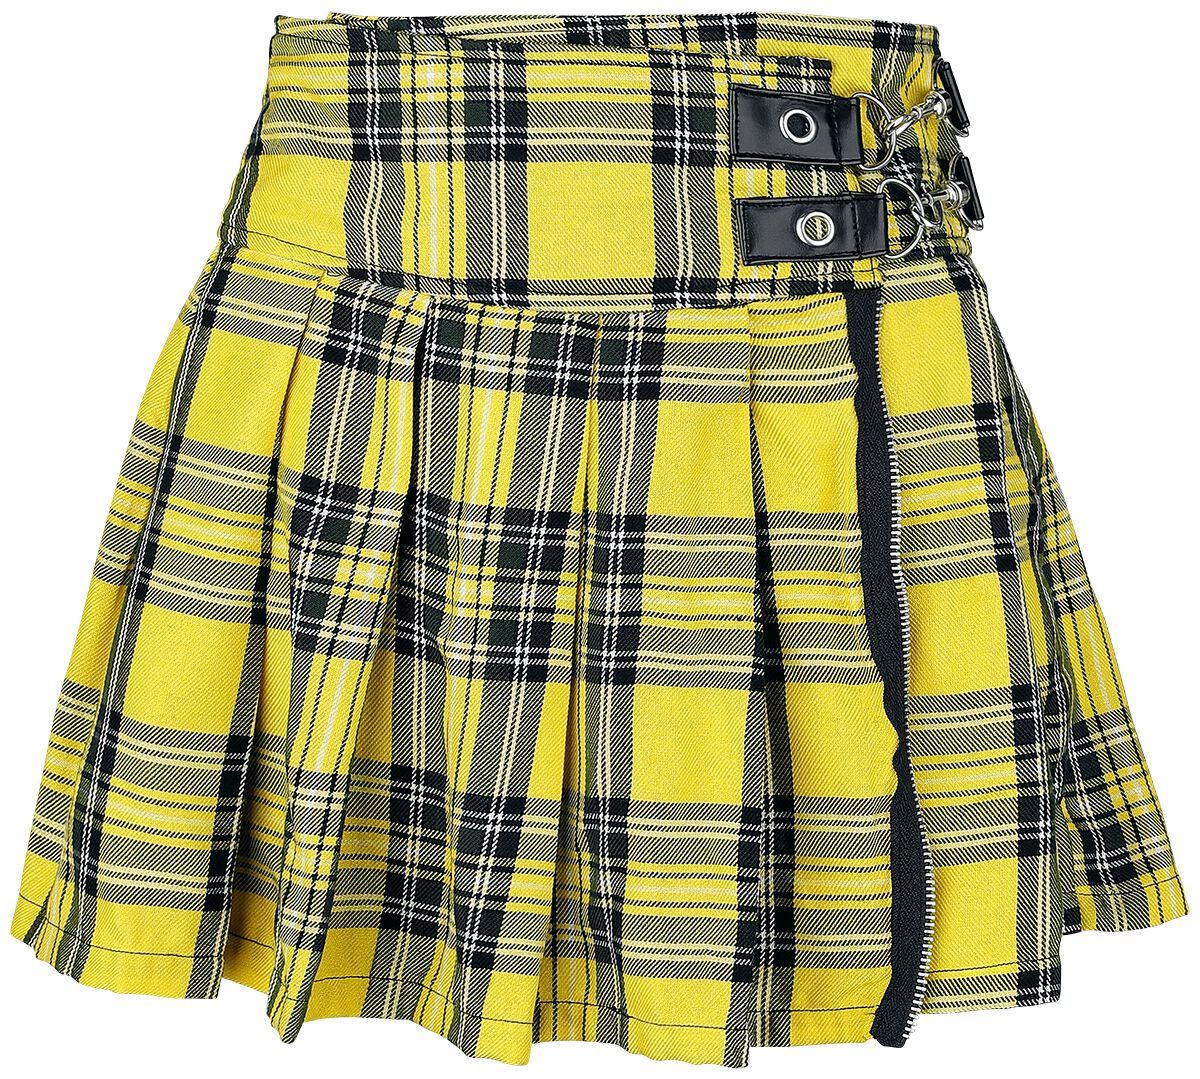 Heartless Effemy Skirt Short skirt black yellow